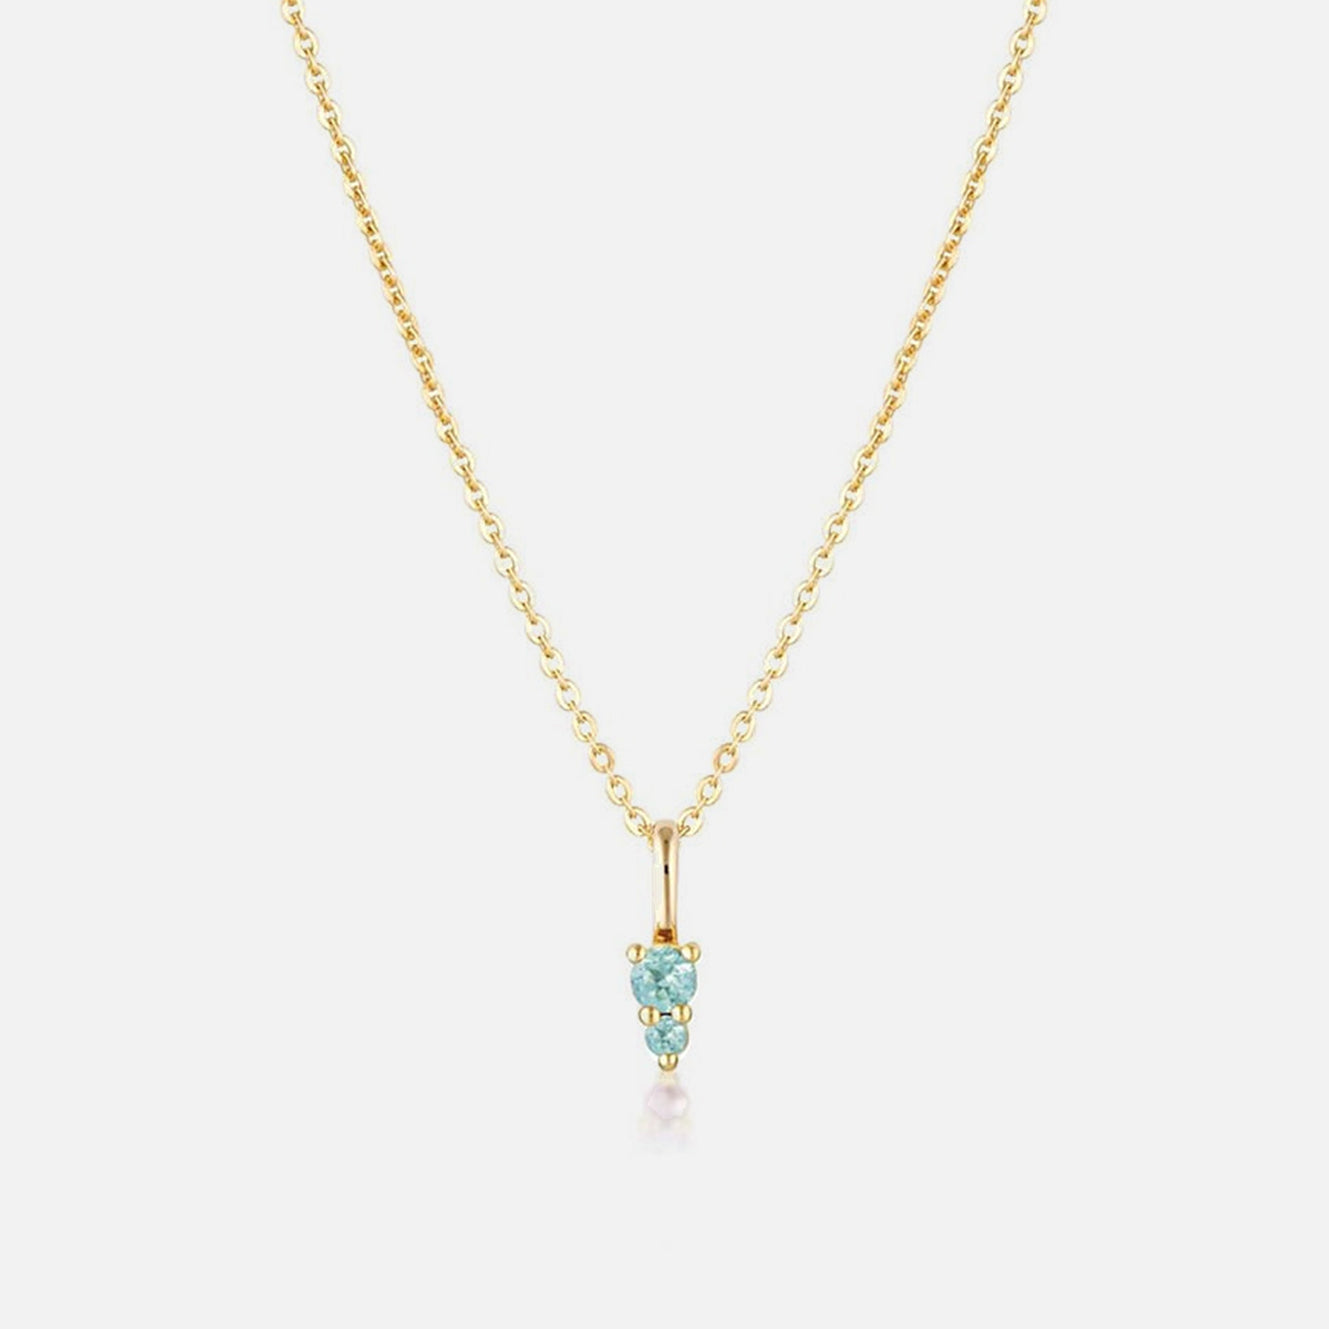 Linda Tahija - Binary Gemstone Necklace - Gold Plated - Blue Topaz